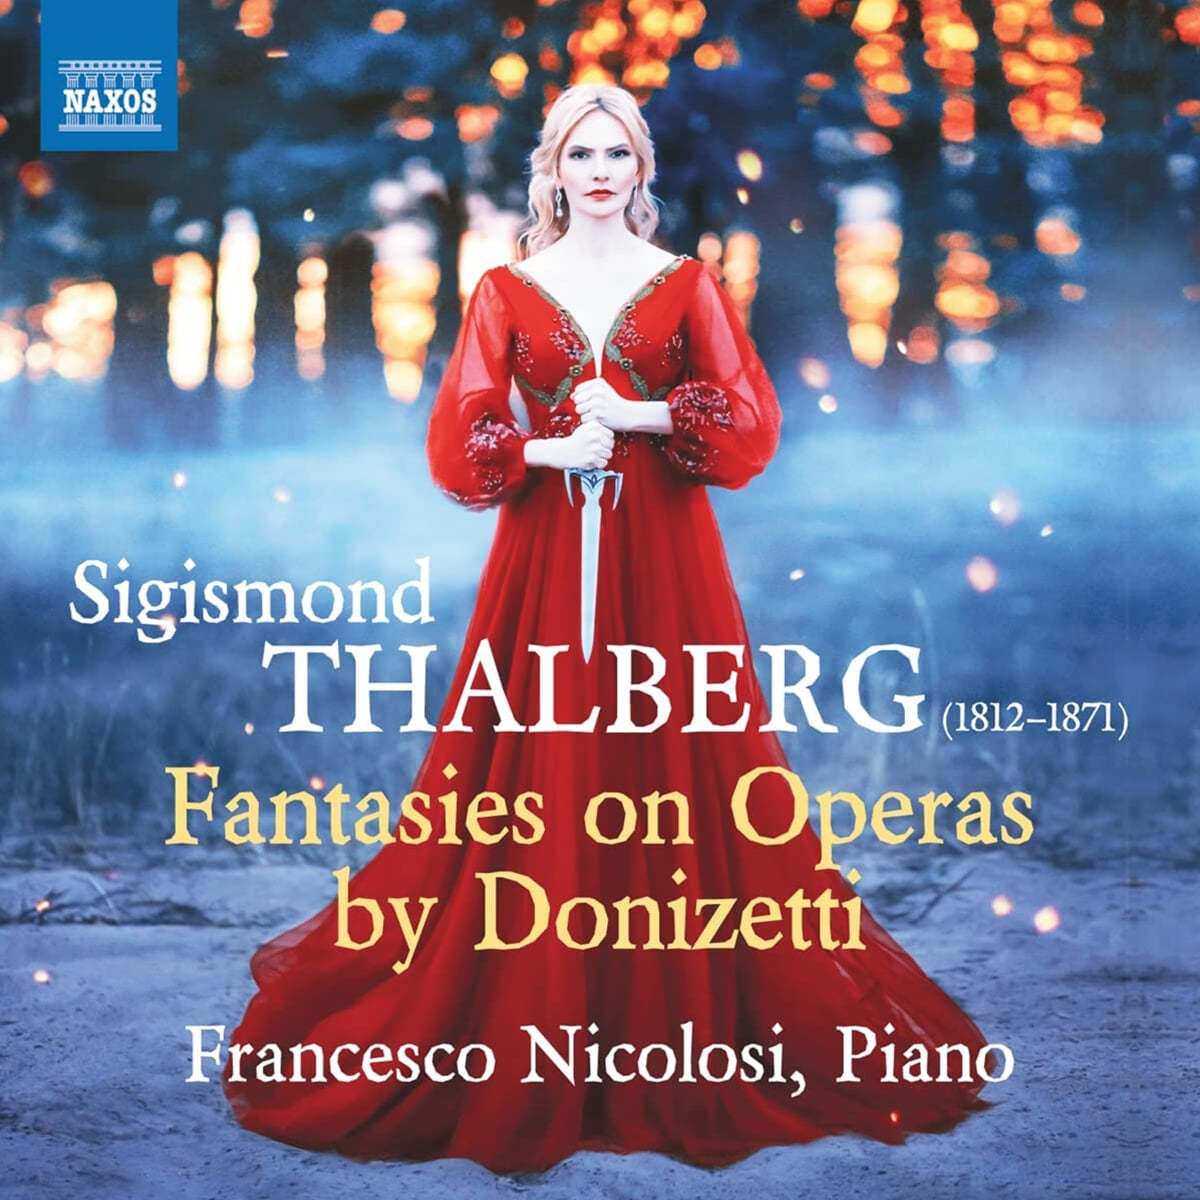 Francesco Nicolosi 탈베르크: 도니제티 오페라에 의한 환상곡 (Sigismond Thalberg: Fantasies On Operas By Donizetti)